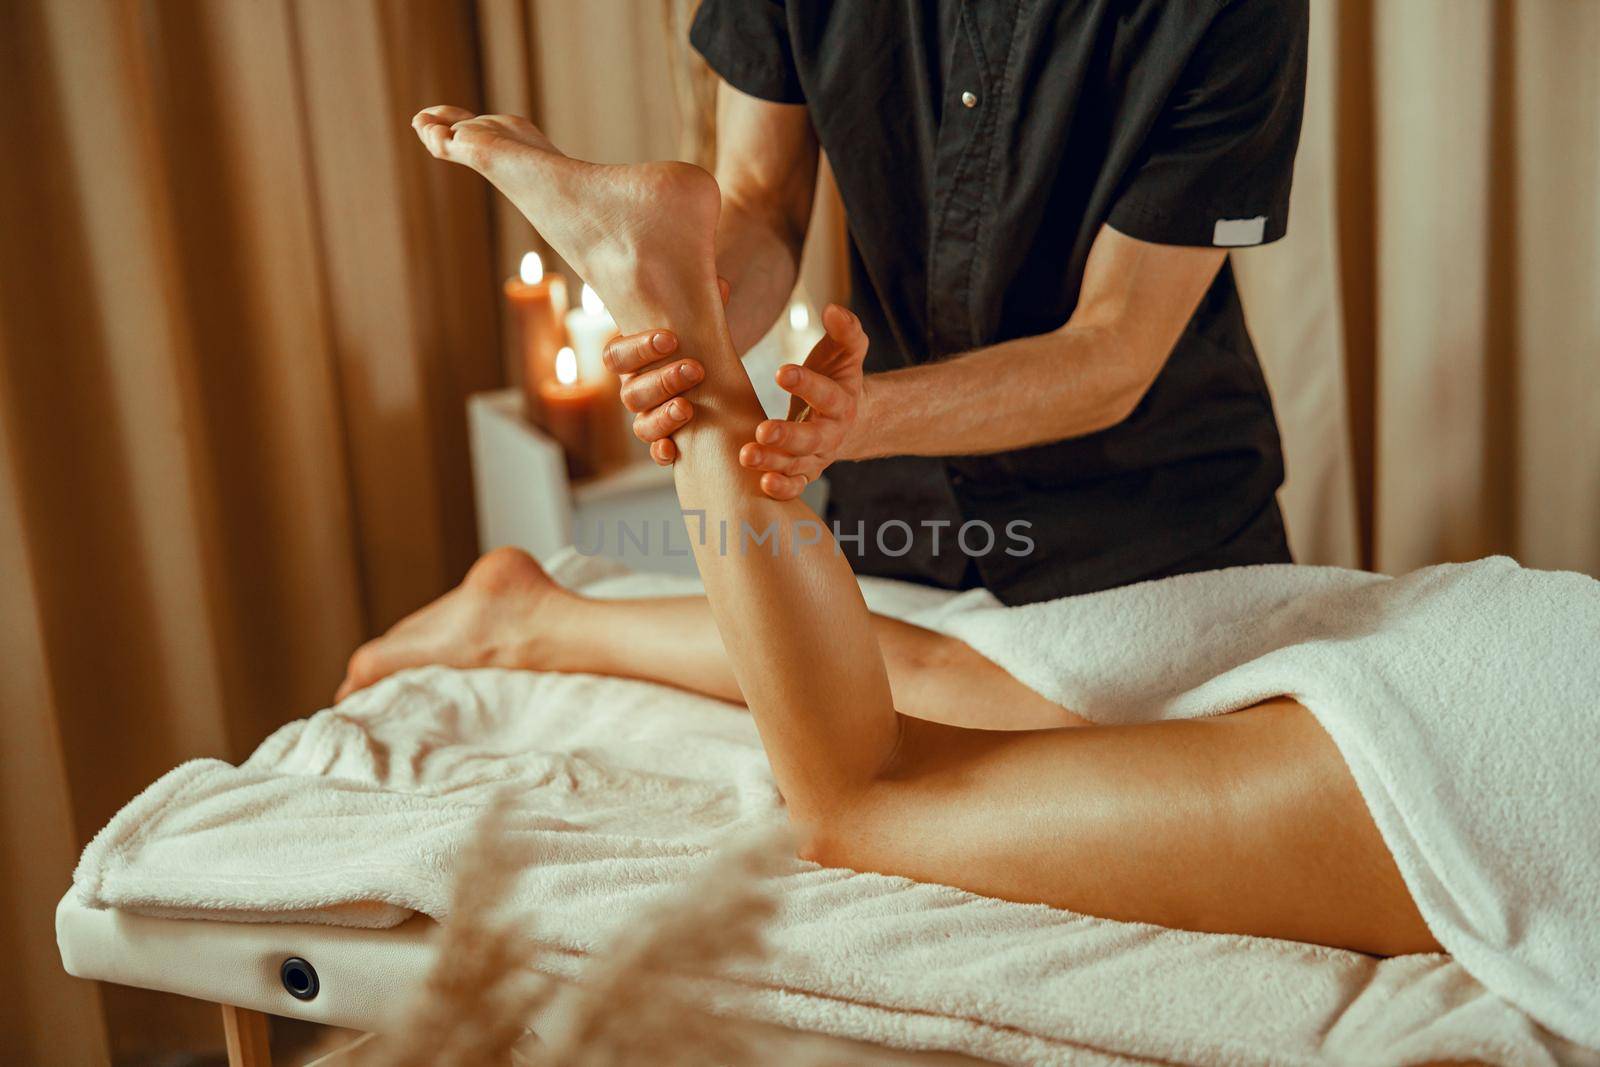 Professional male masseur doing foot massage female client in spa salon by Yaroslav_astakhov